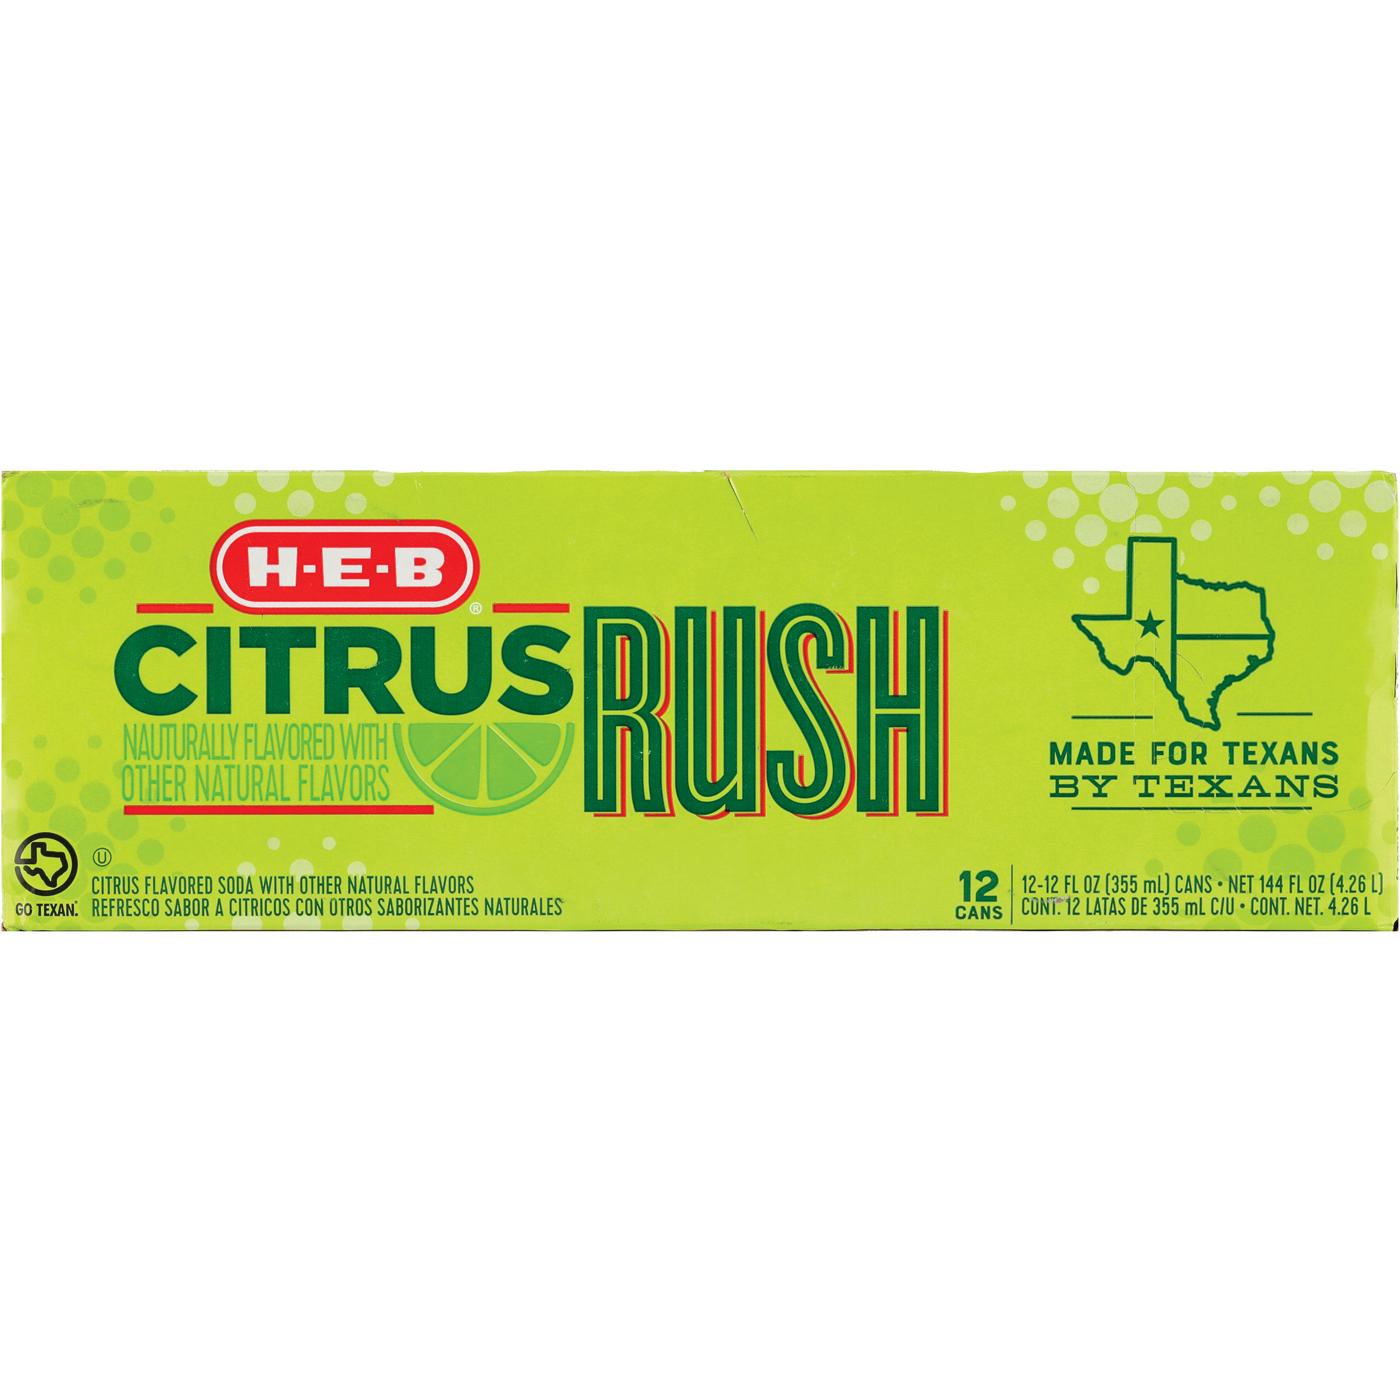 H-E-B Citrus Rush Soda 12 pk Cans; image 1 of 2